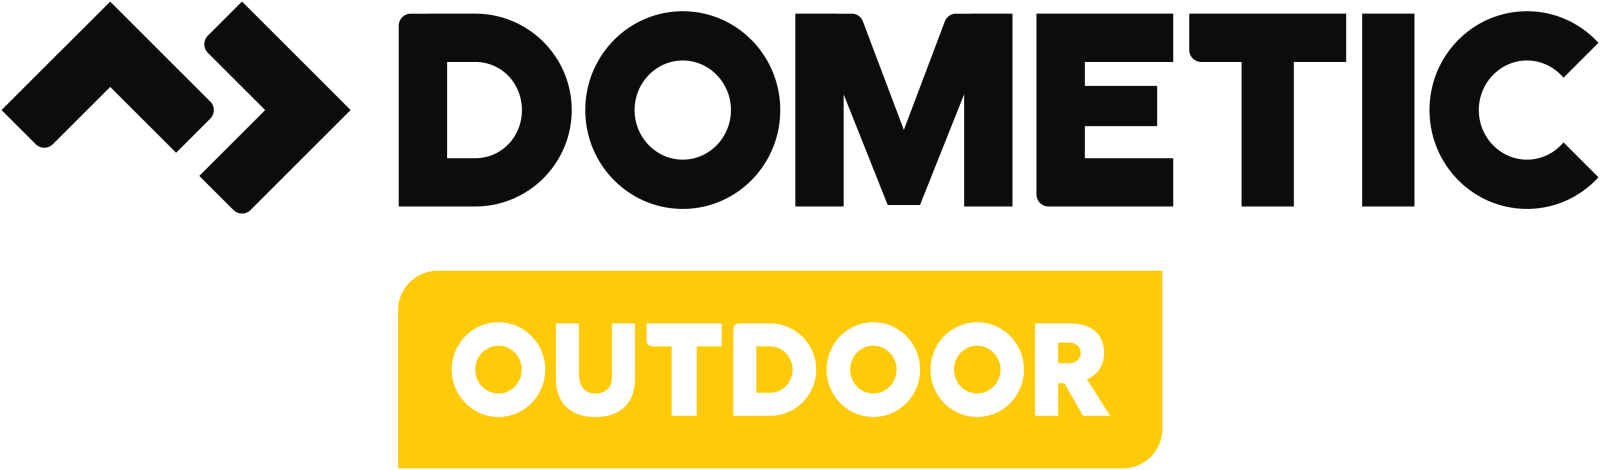 Dometic Outdoor Logo Vertical Black Rgb